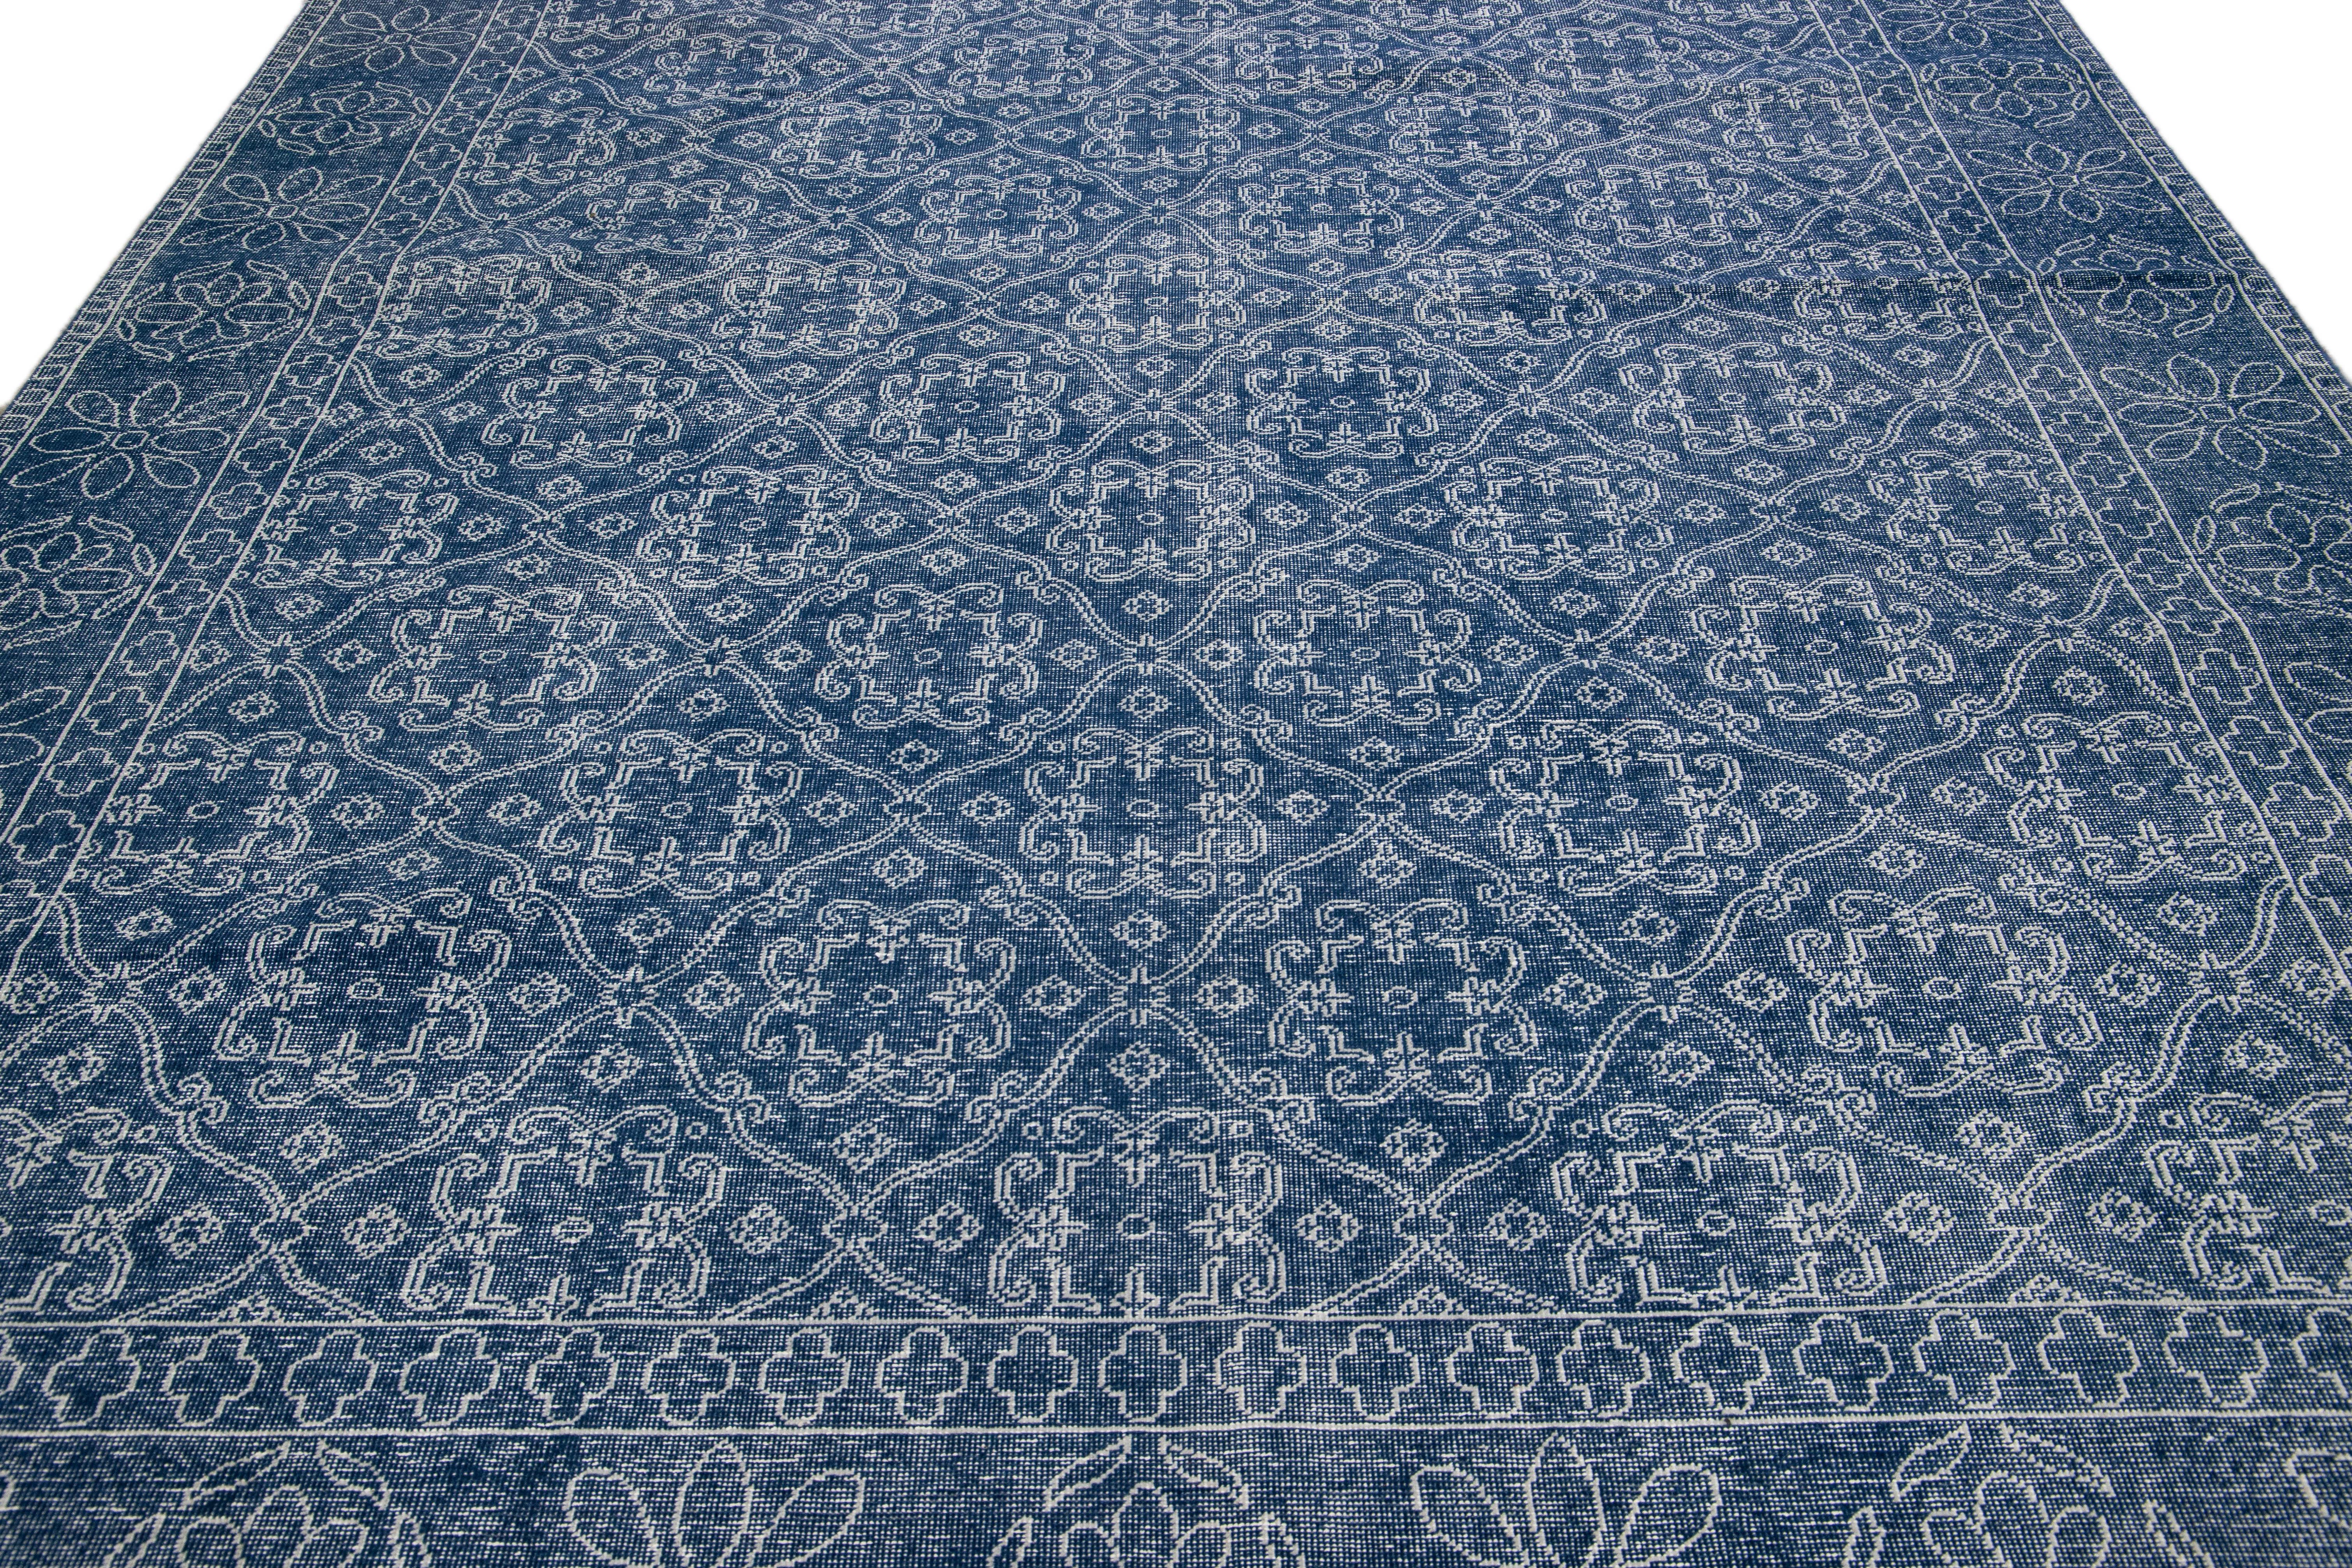 Turkish Blue Mid-Century Modern Style Handmade Floral Trellis Motif Wool Rug For Sale